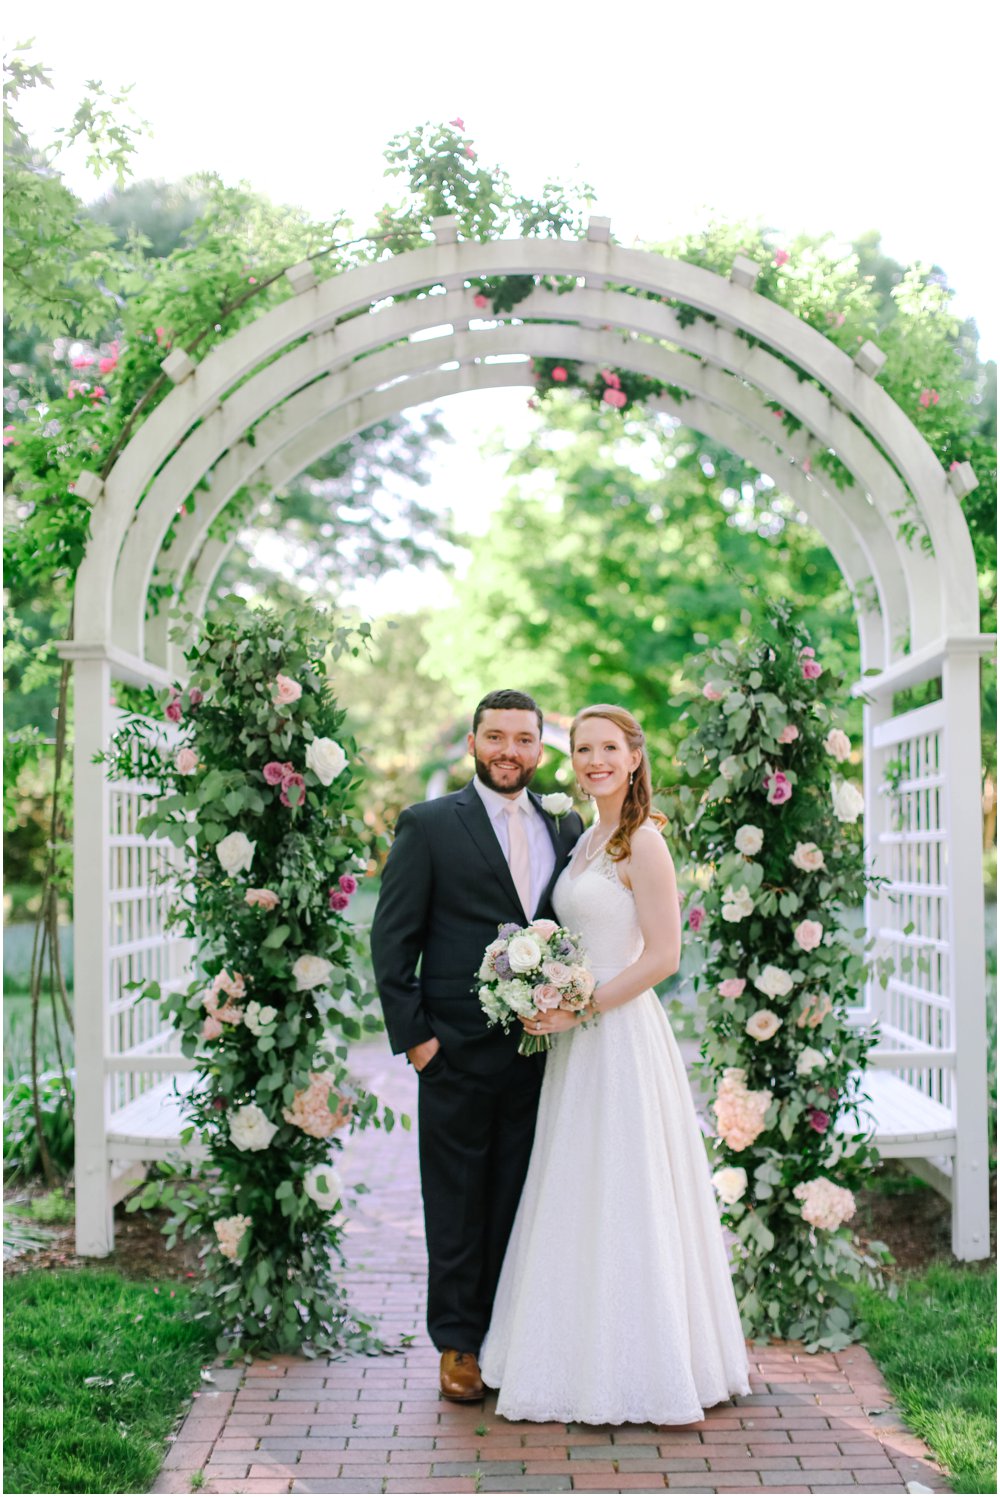 Lewis Ginter Botanical Garden Wedding | Nicki Metcalf Photography